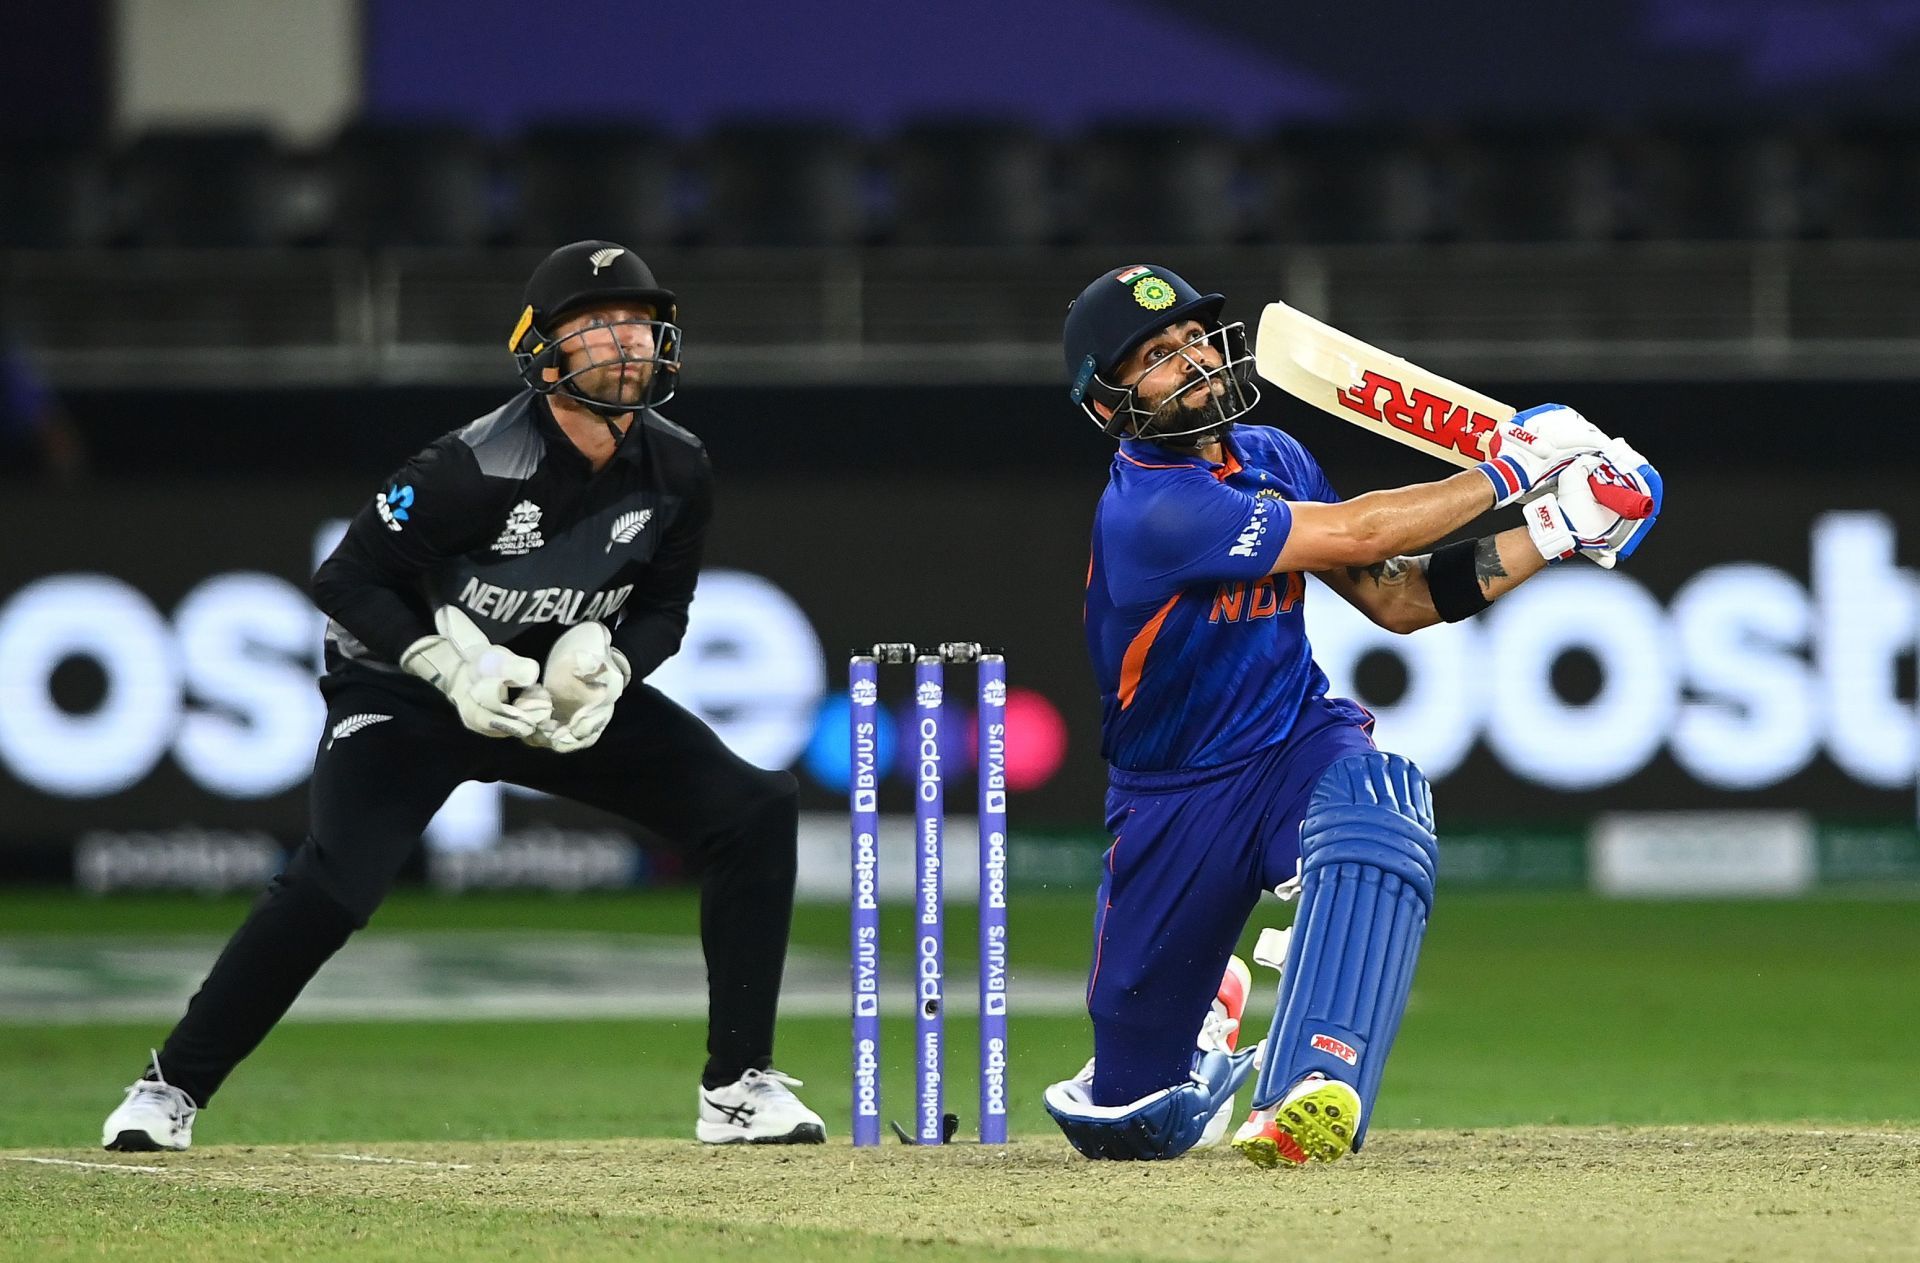 Indian captain Virat Kohli batting against New Zealand. Pic: Getty Images